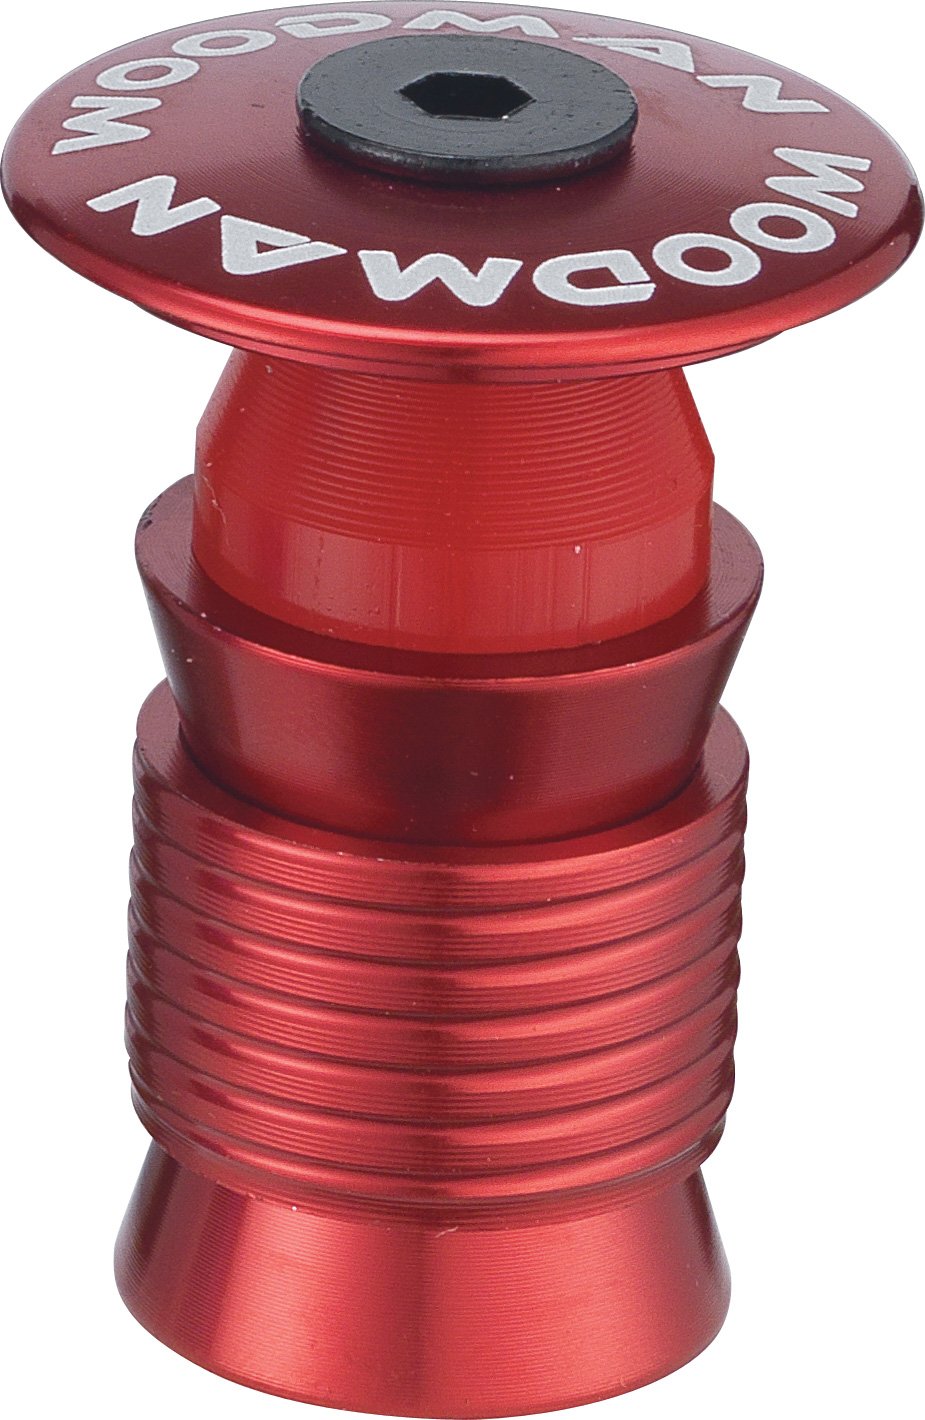 Woodman Capsule PH 1.1/8" Re-useable Ahead Plug Aqua Red